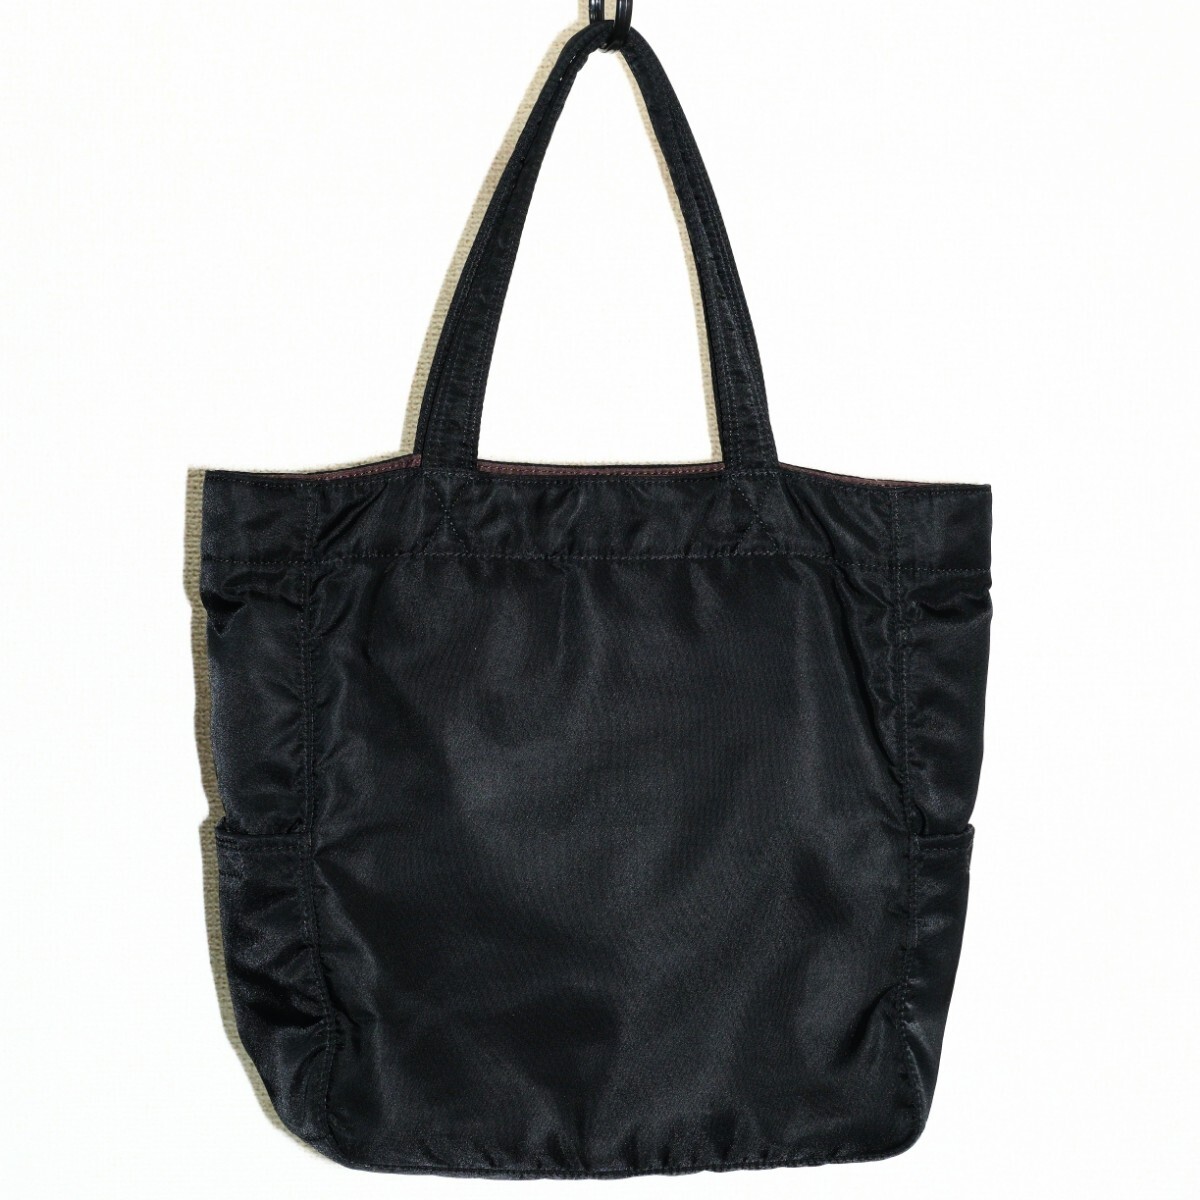 PORTER CREAM tote bag black ( Porter / cream / Yoshida bag / nylon tsu il / black / used / men's / lady's / tongue car manner / travel / commuting )